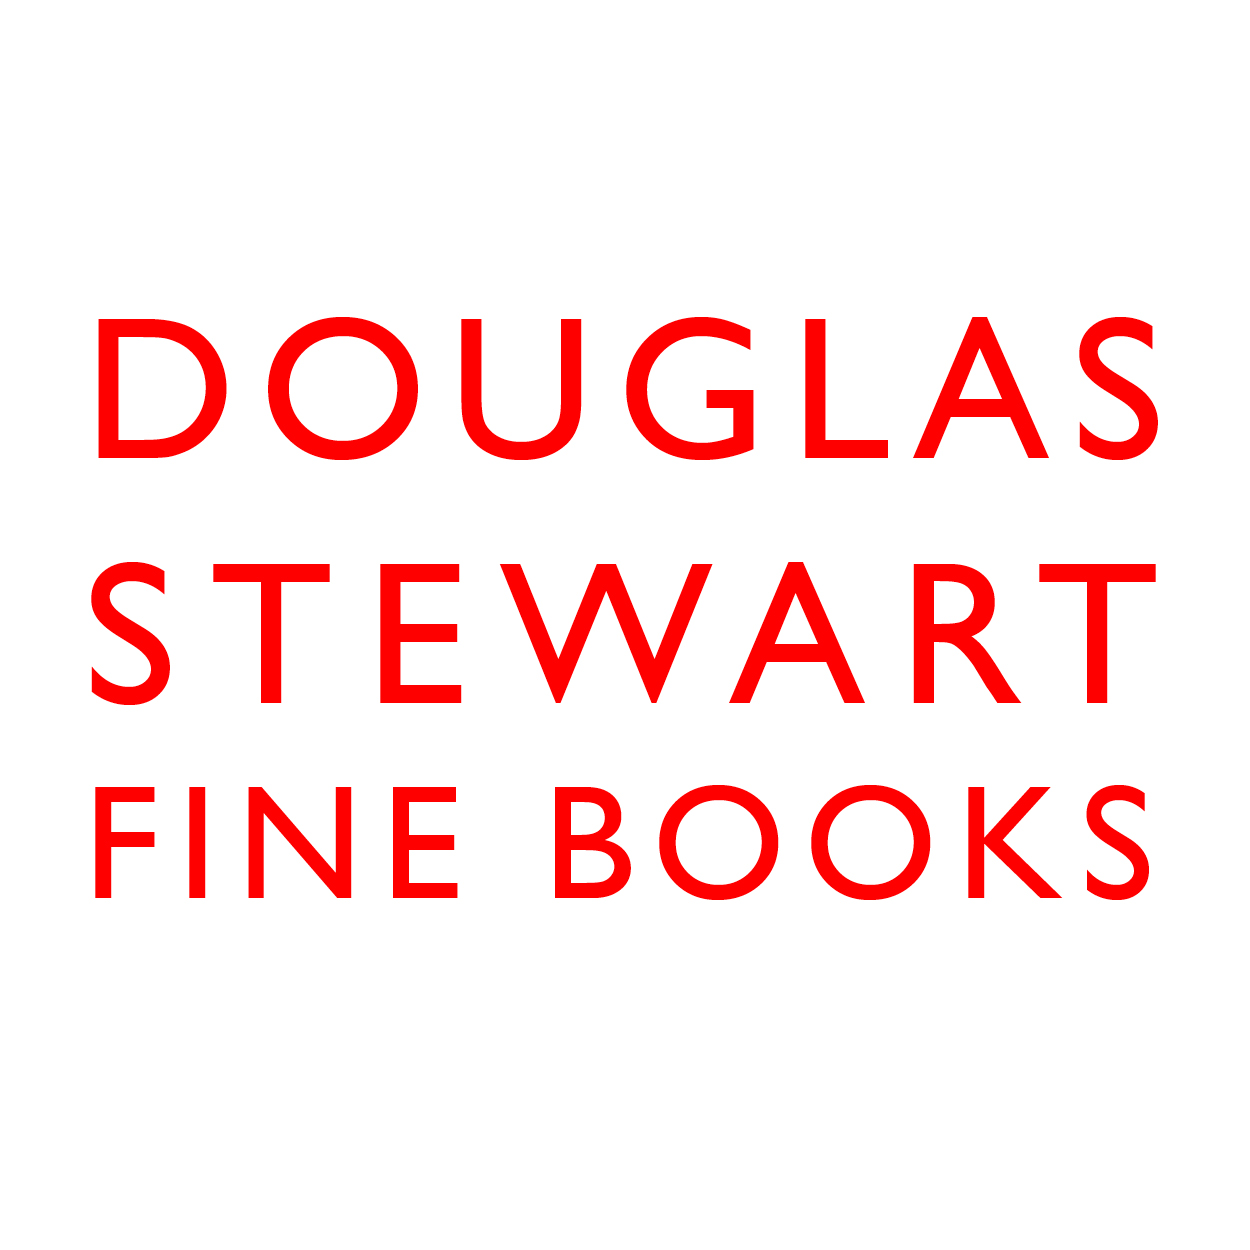 Douglas Stewart Fine Books